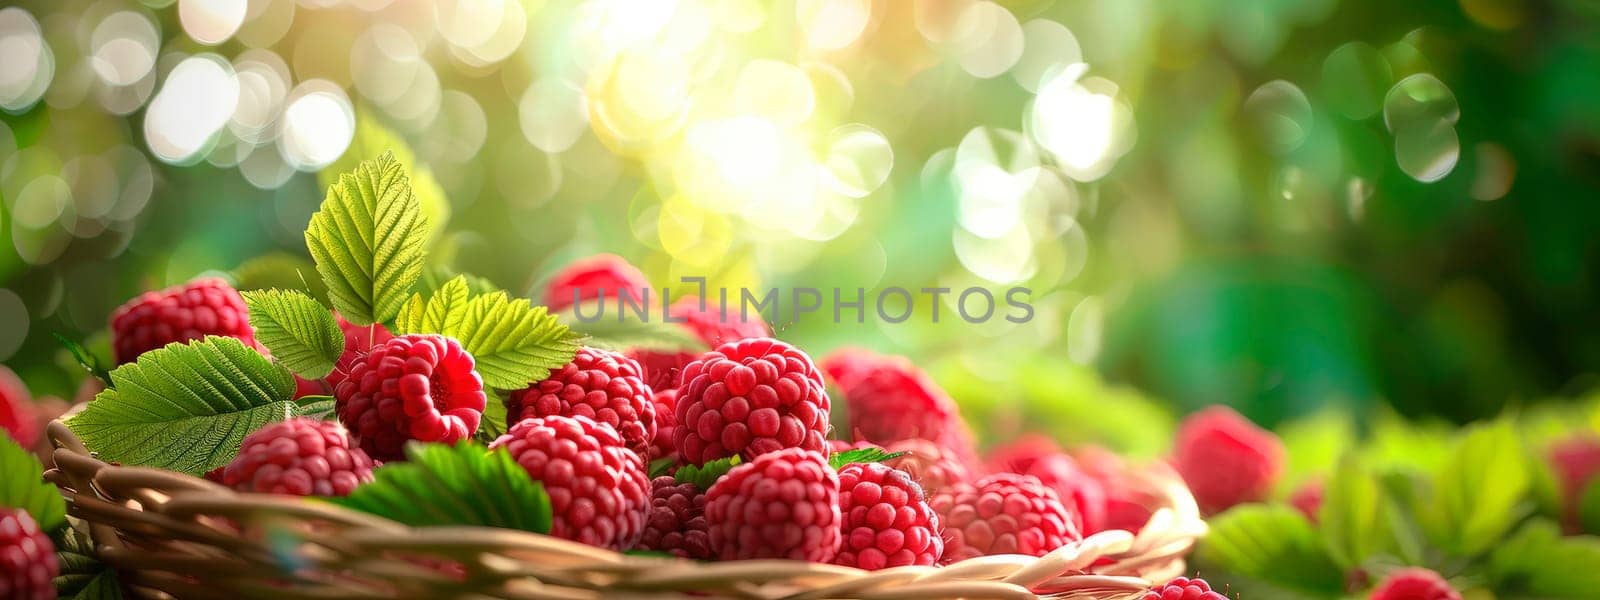 raspberries in a basket in the garden. selective focus. by yanadjana